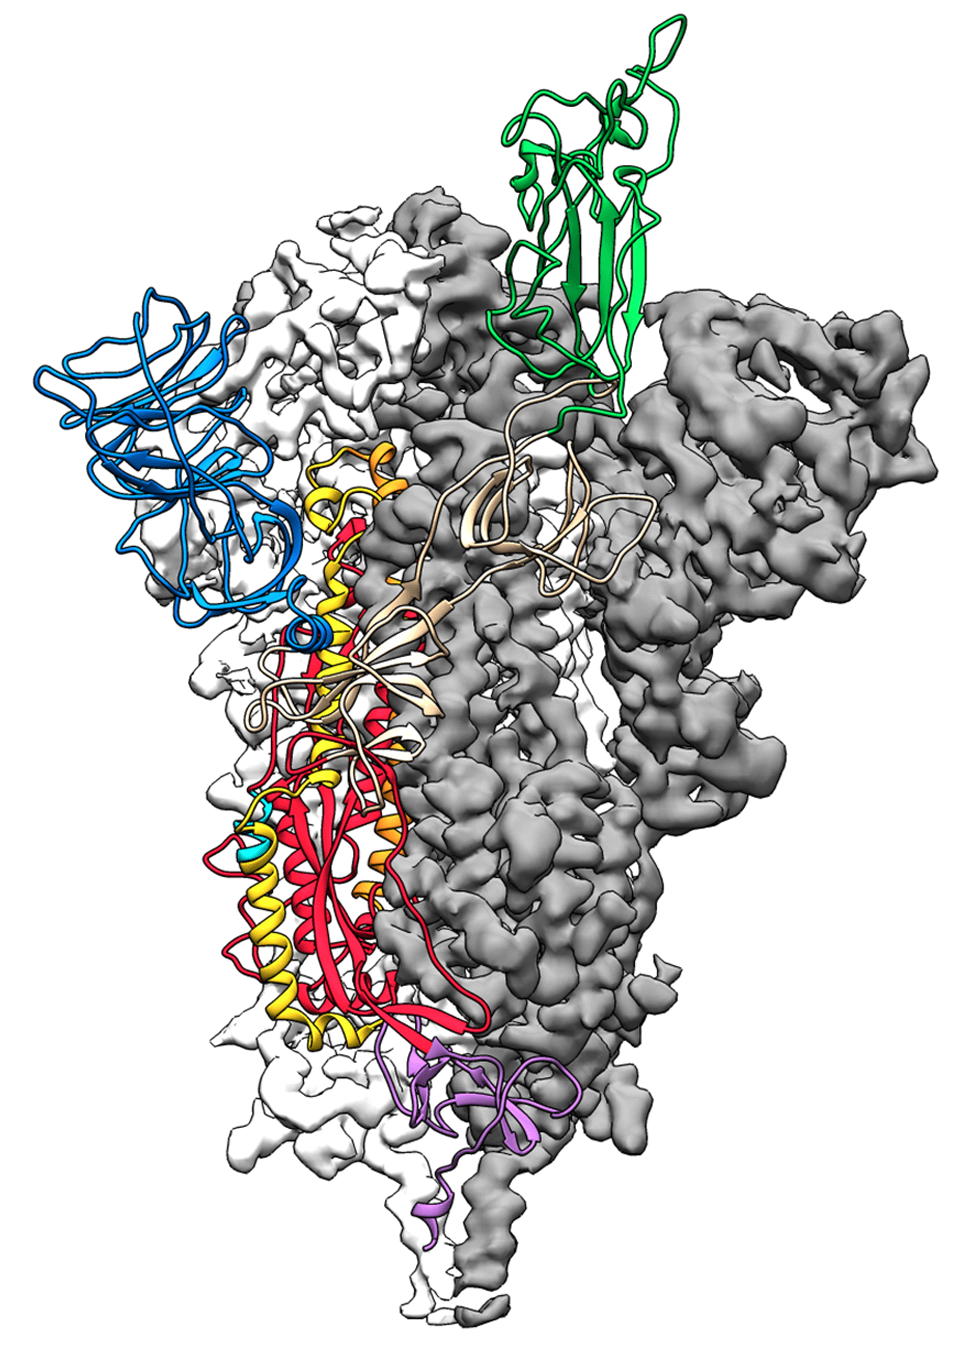 https://structura.bio/_next/image?url=%2Fspike-protein-structure.png&w=1080&q=75